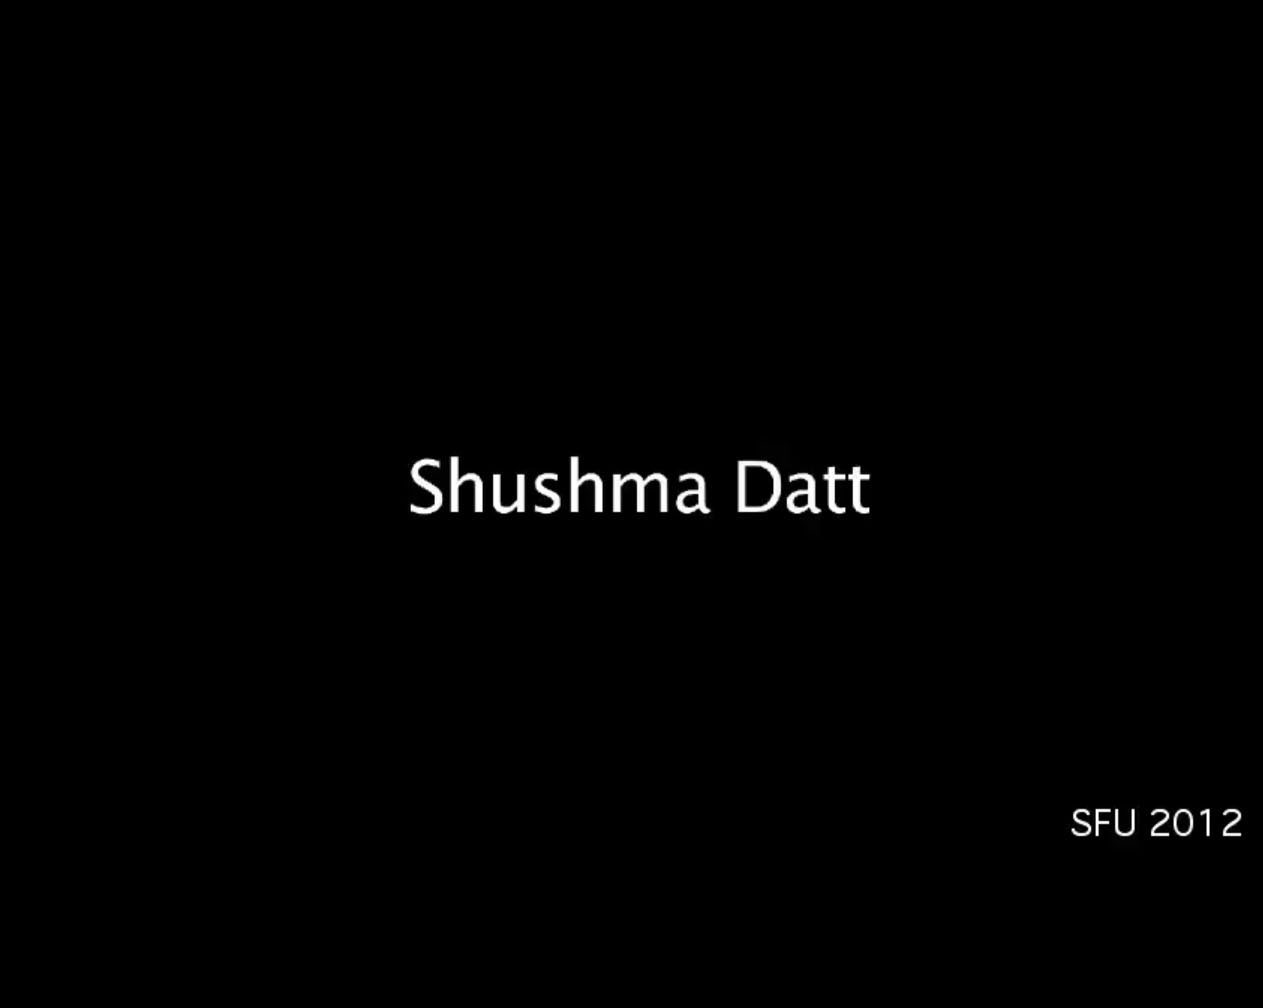 Shushma Datt interview